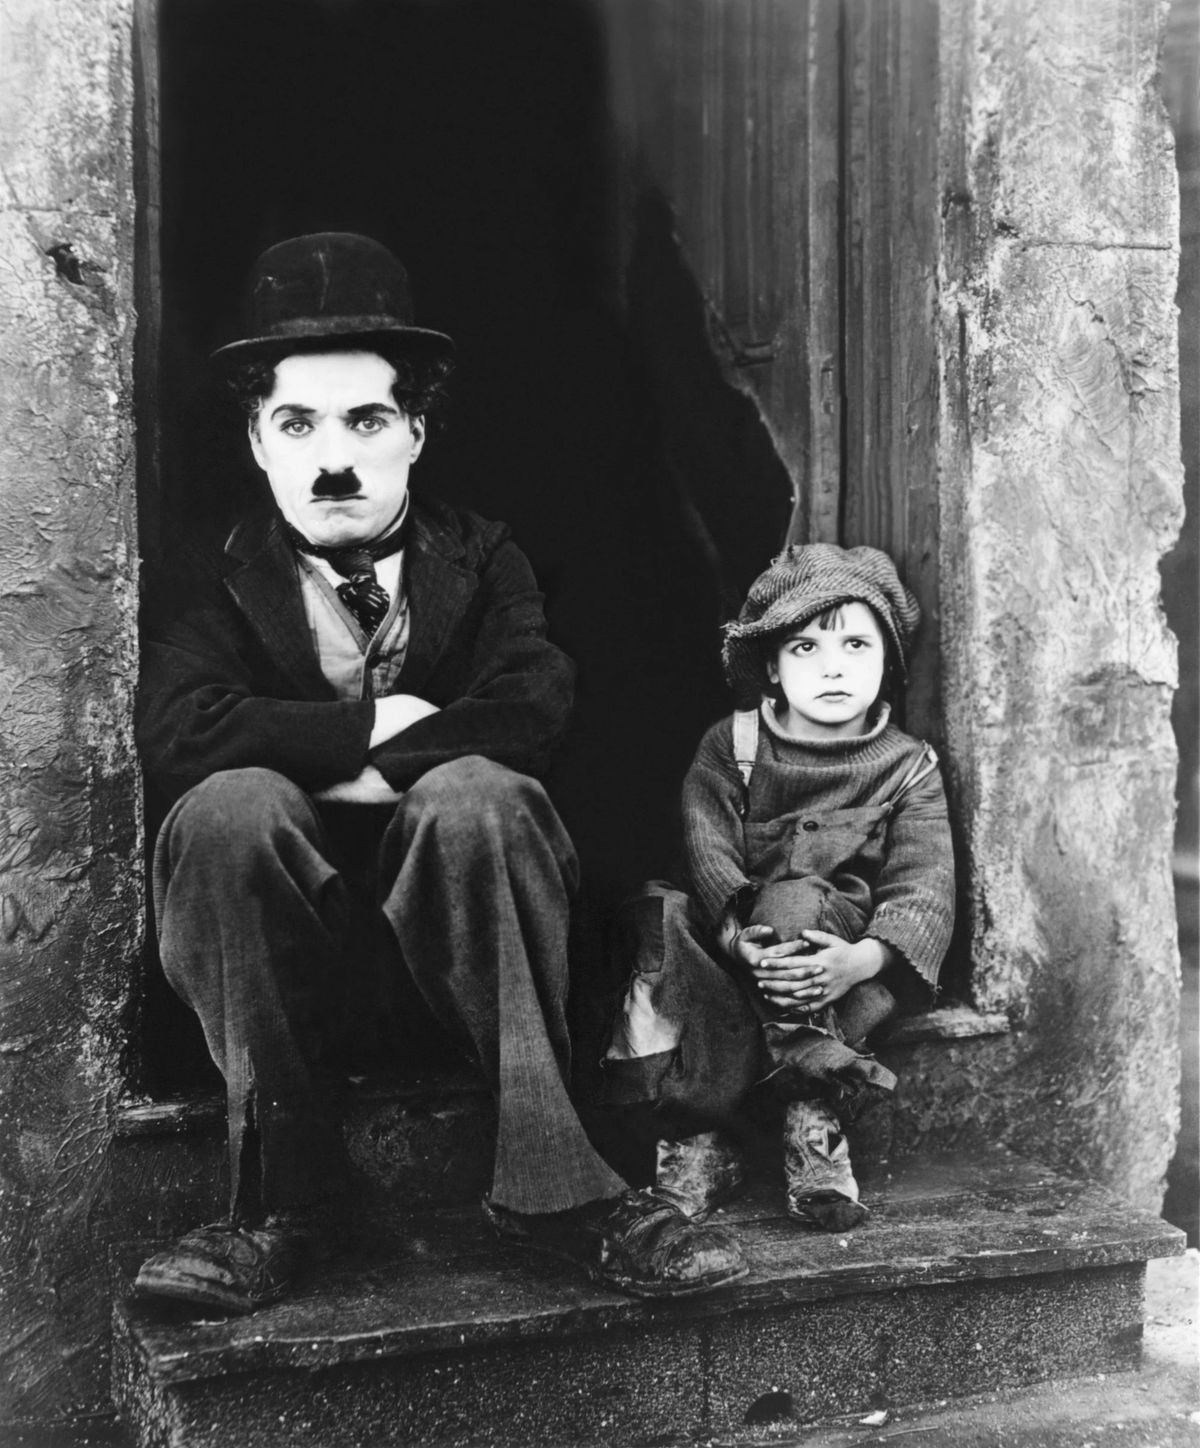 Silent Film: The Kid (1921)